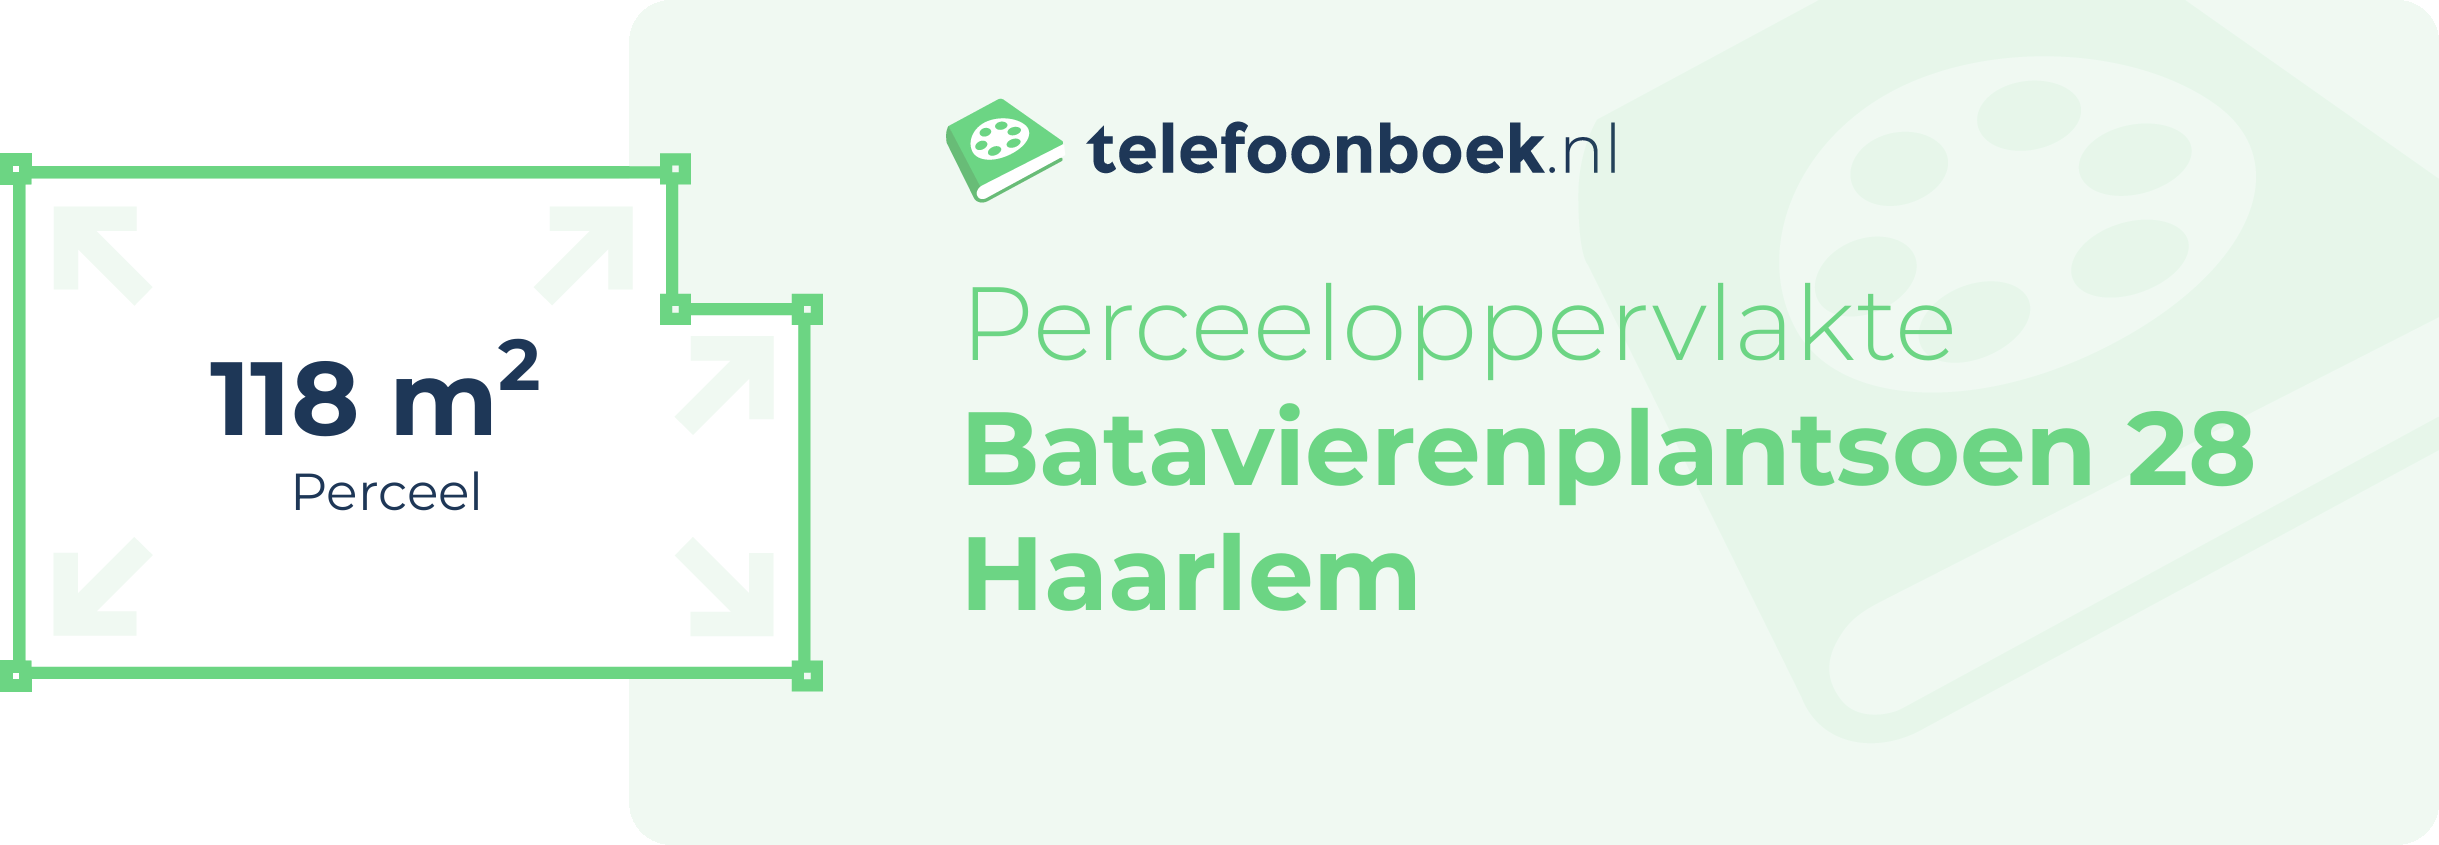 Perceeloppervlakte Batavierenplantsoen 28 Haarlem